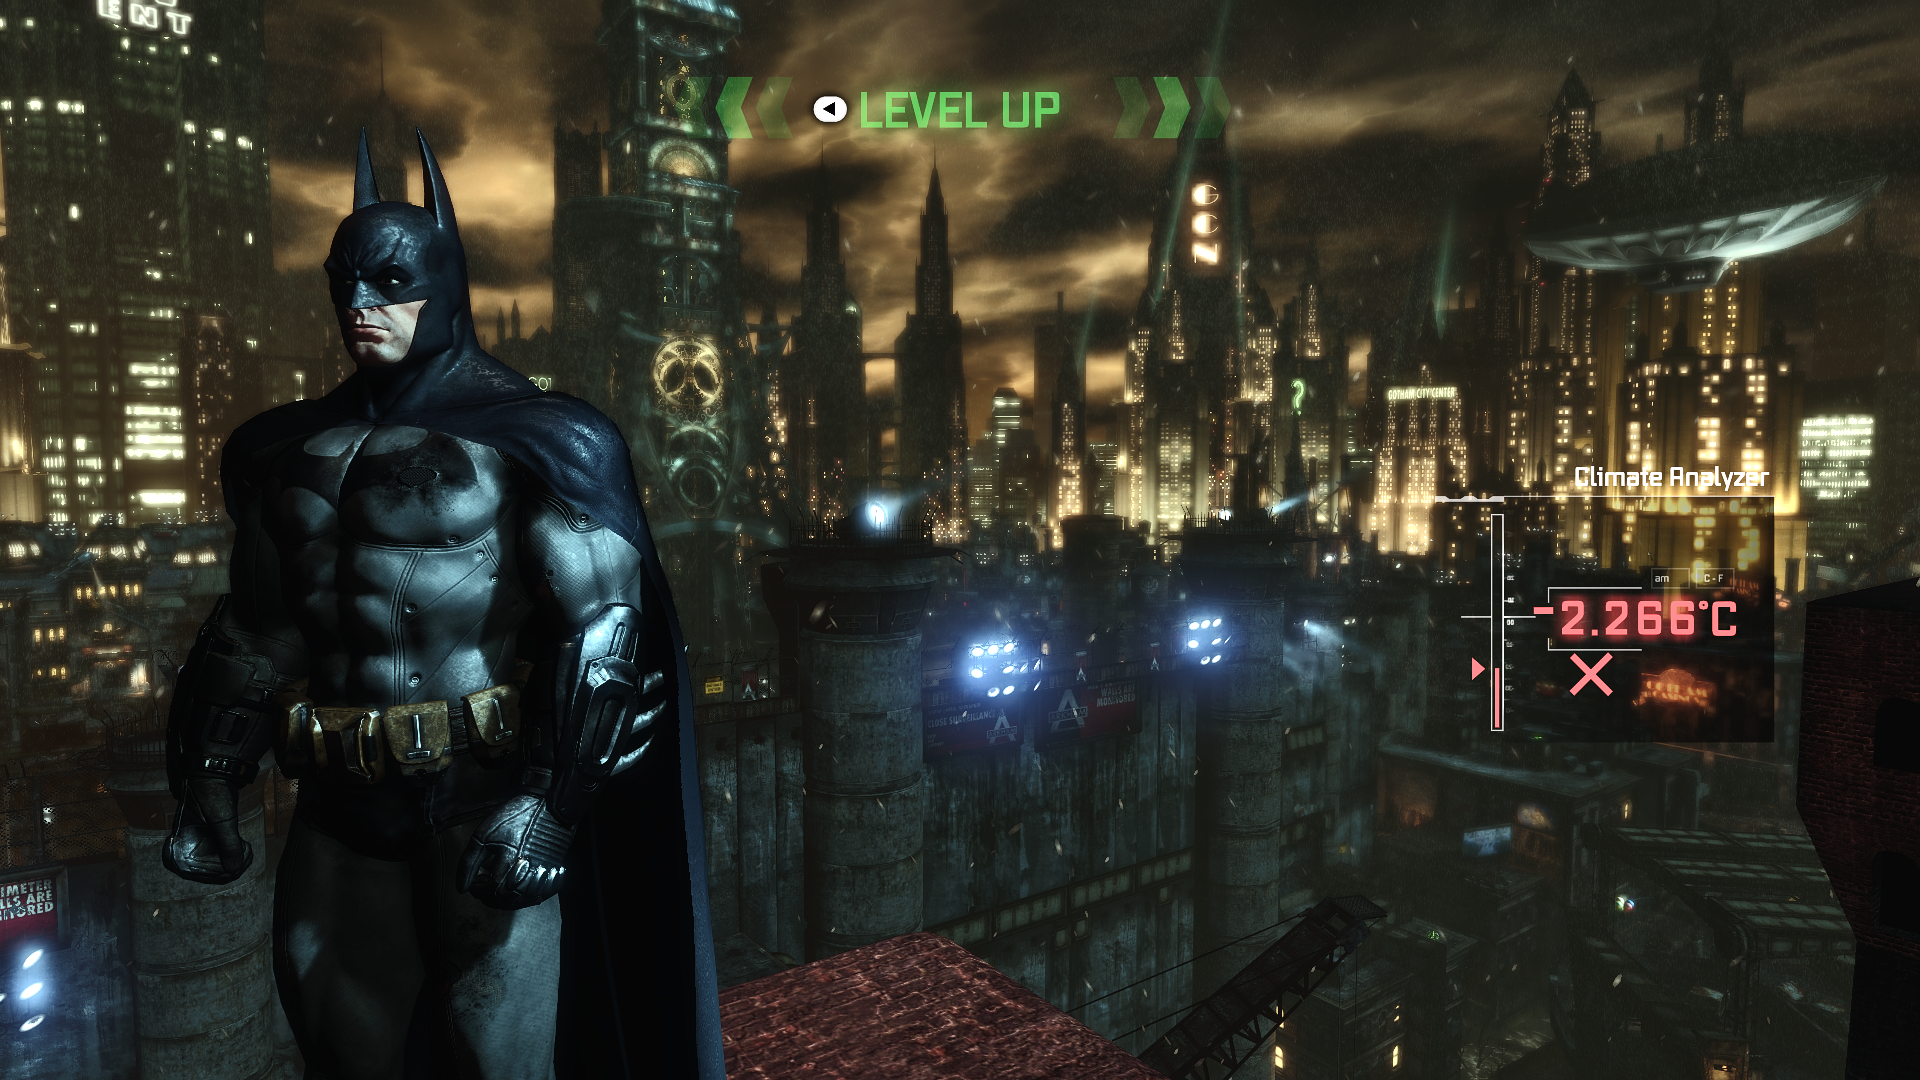 Как проходить бэтмена аркхем. Игра Бэтмен Аркхем Сити Робин. 1.1.1 Batman: Arkham City. Аркхем Сити директ 11. Batman Arkham City SWEETFX.